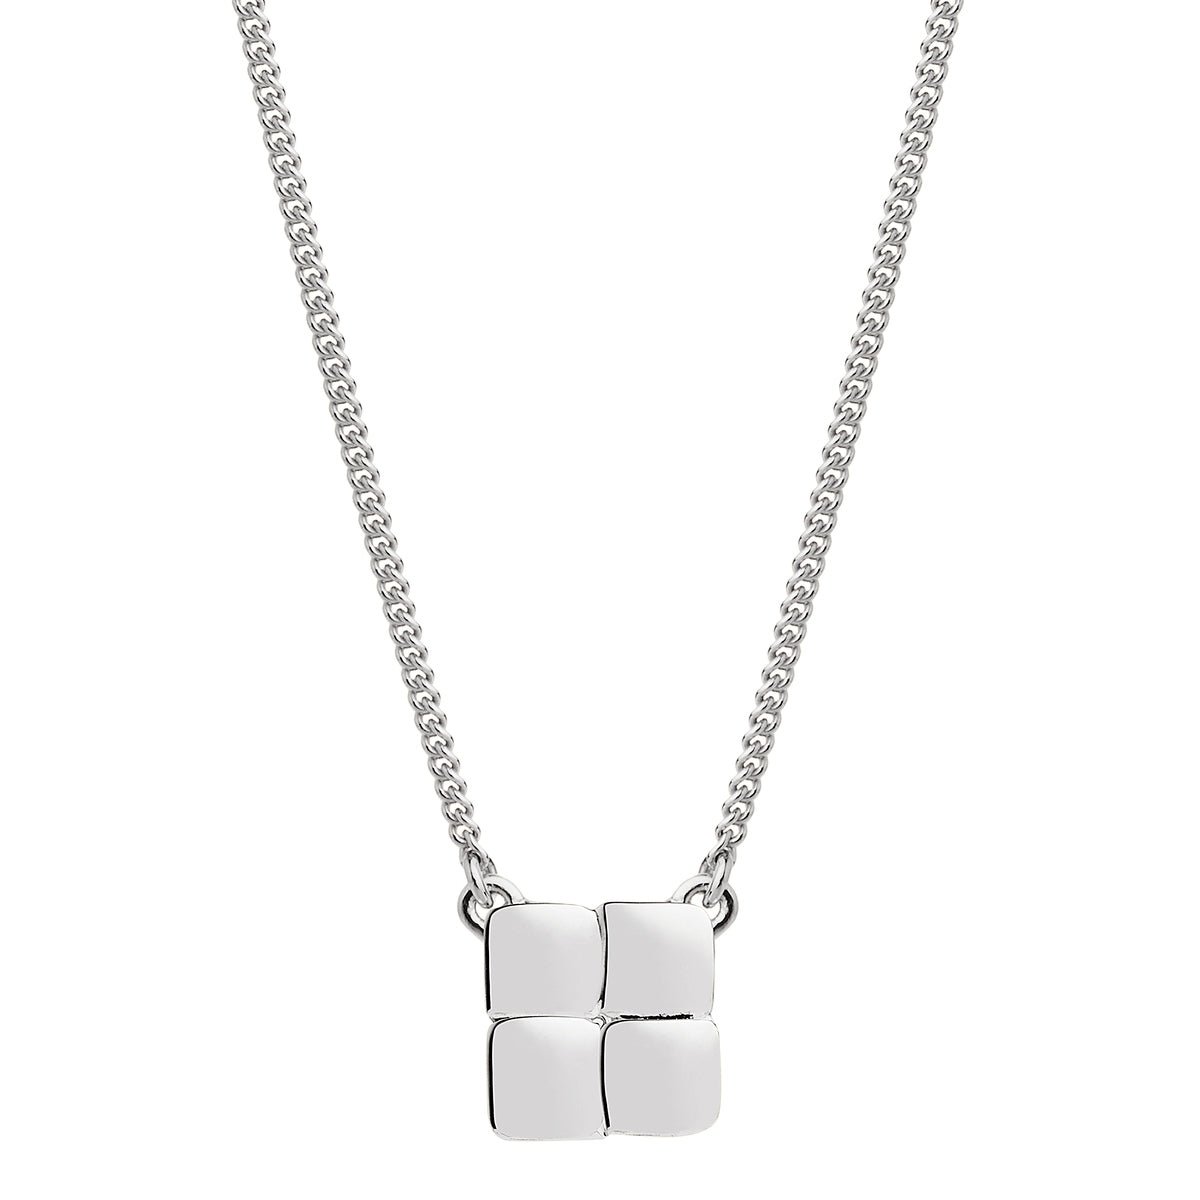 Weave Silver Necklace (42cm+ext)